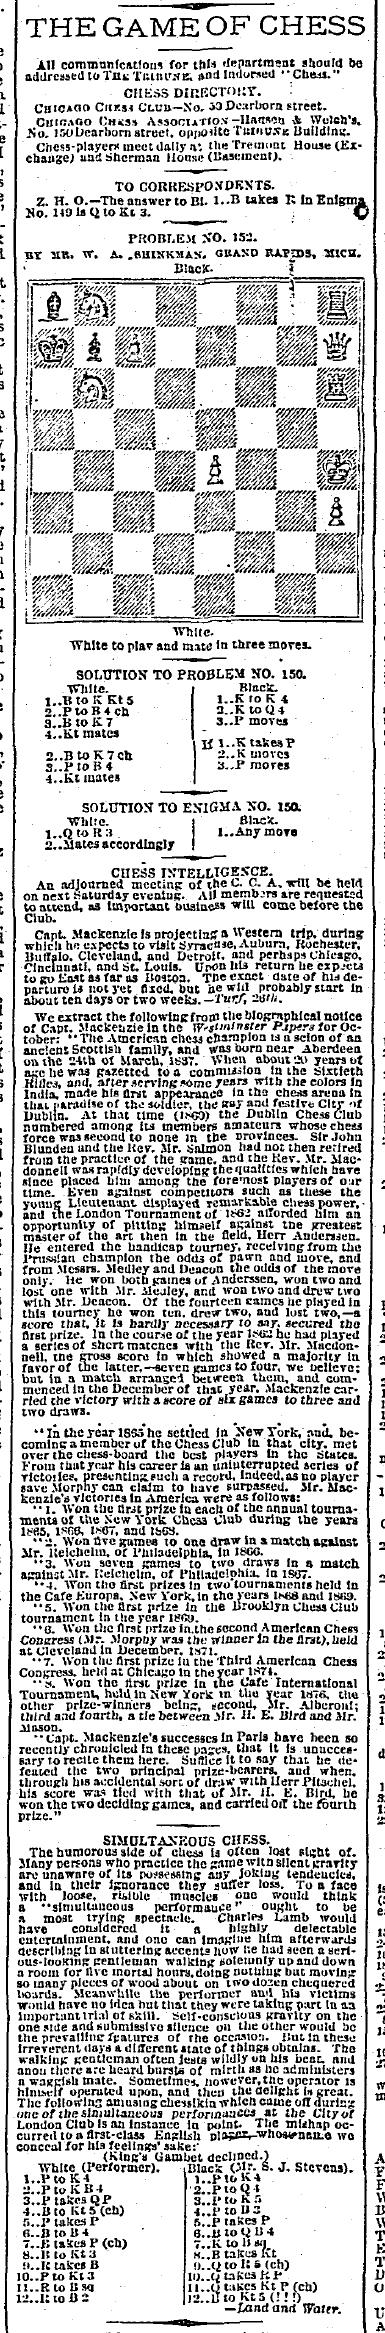 1878.11.03-01 Chicago Tribune.jpg